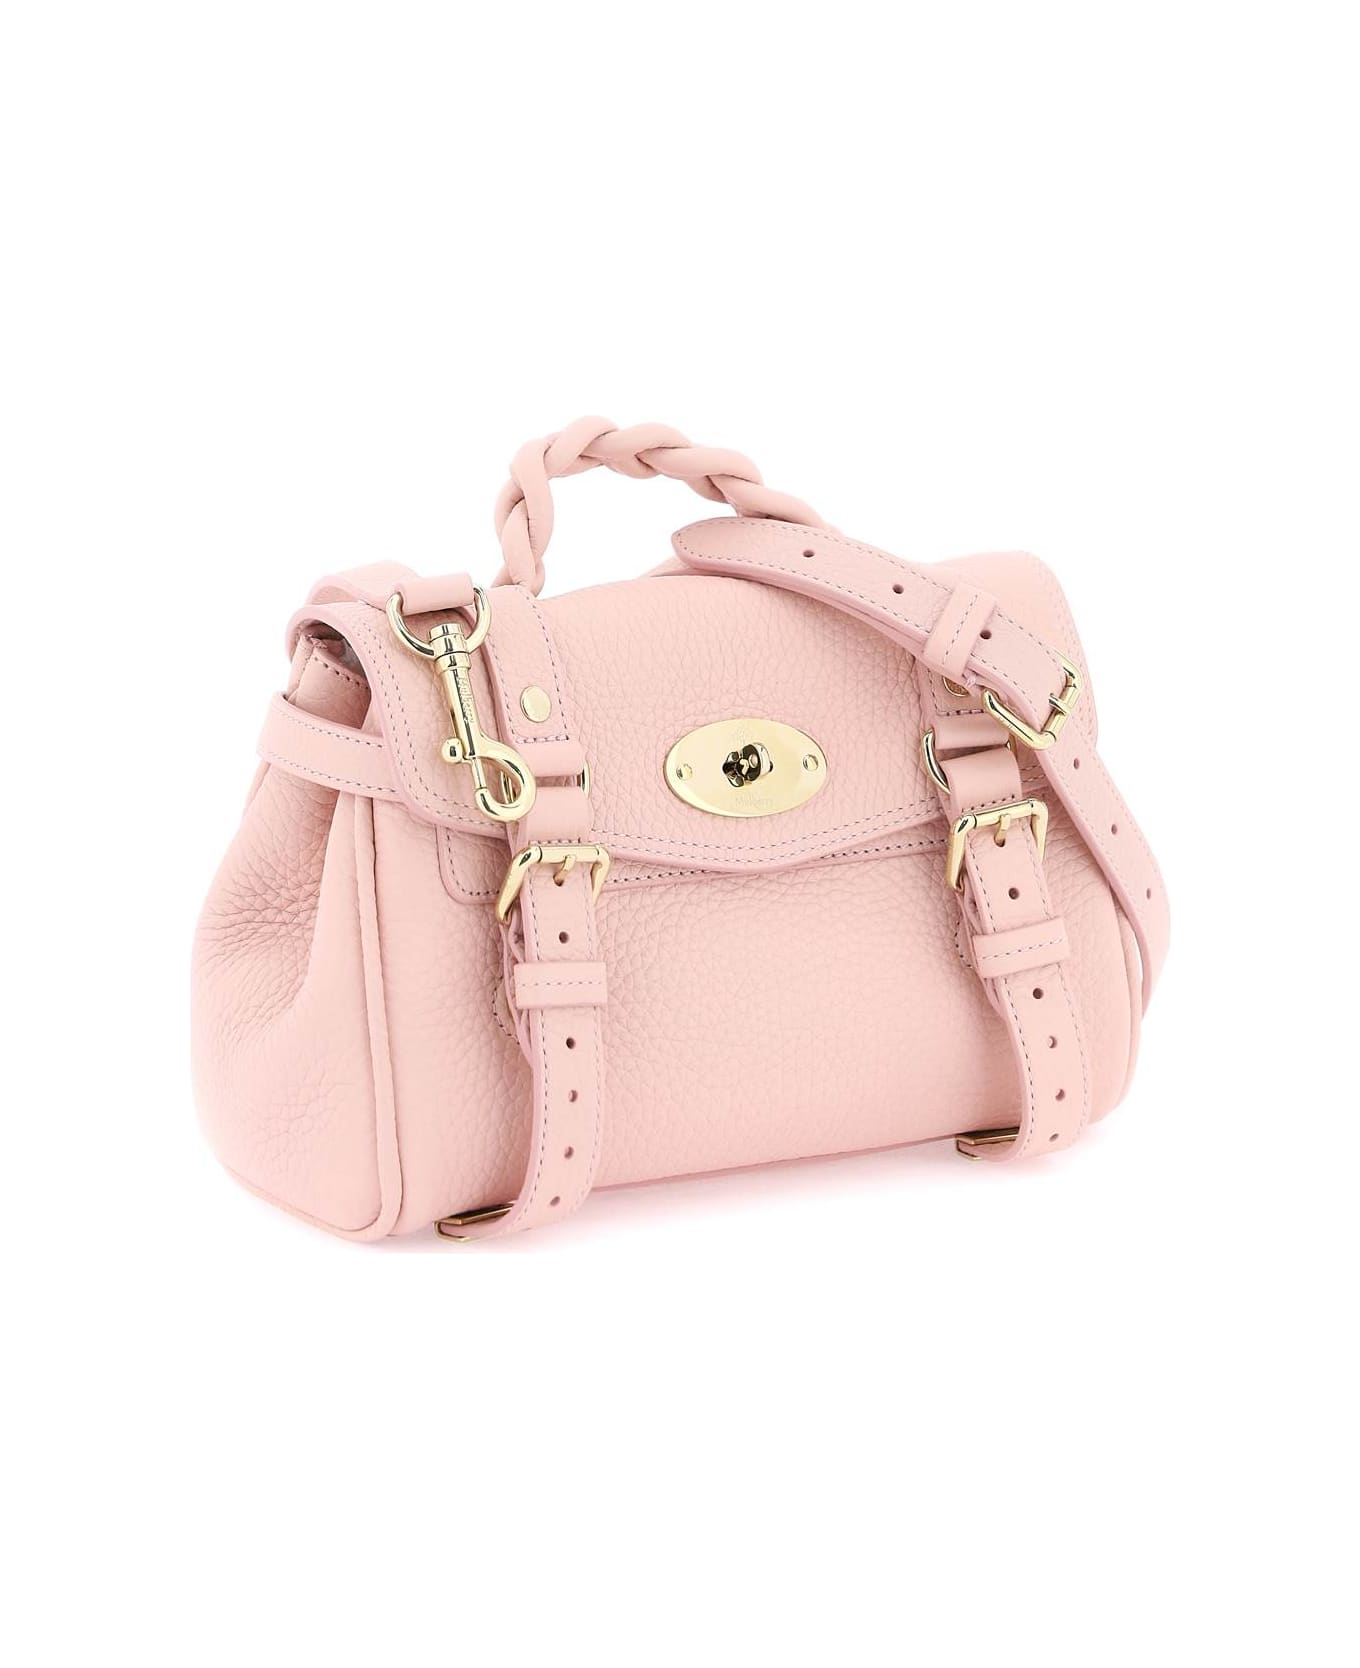 Mulberry 'alexa' Mini Bag - POWDER ROSE (Pink)